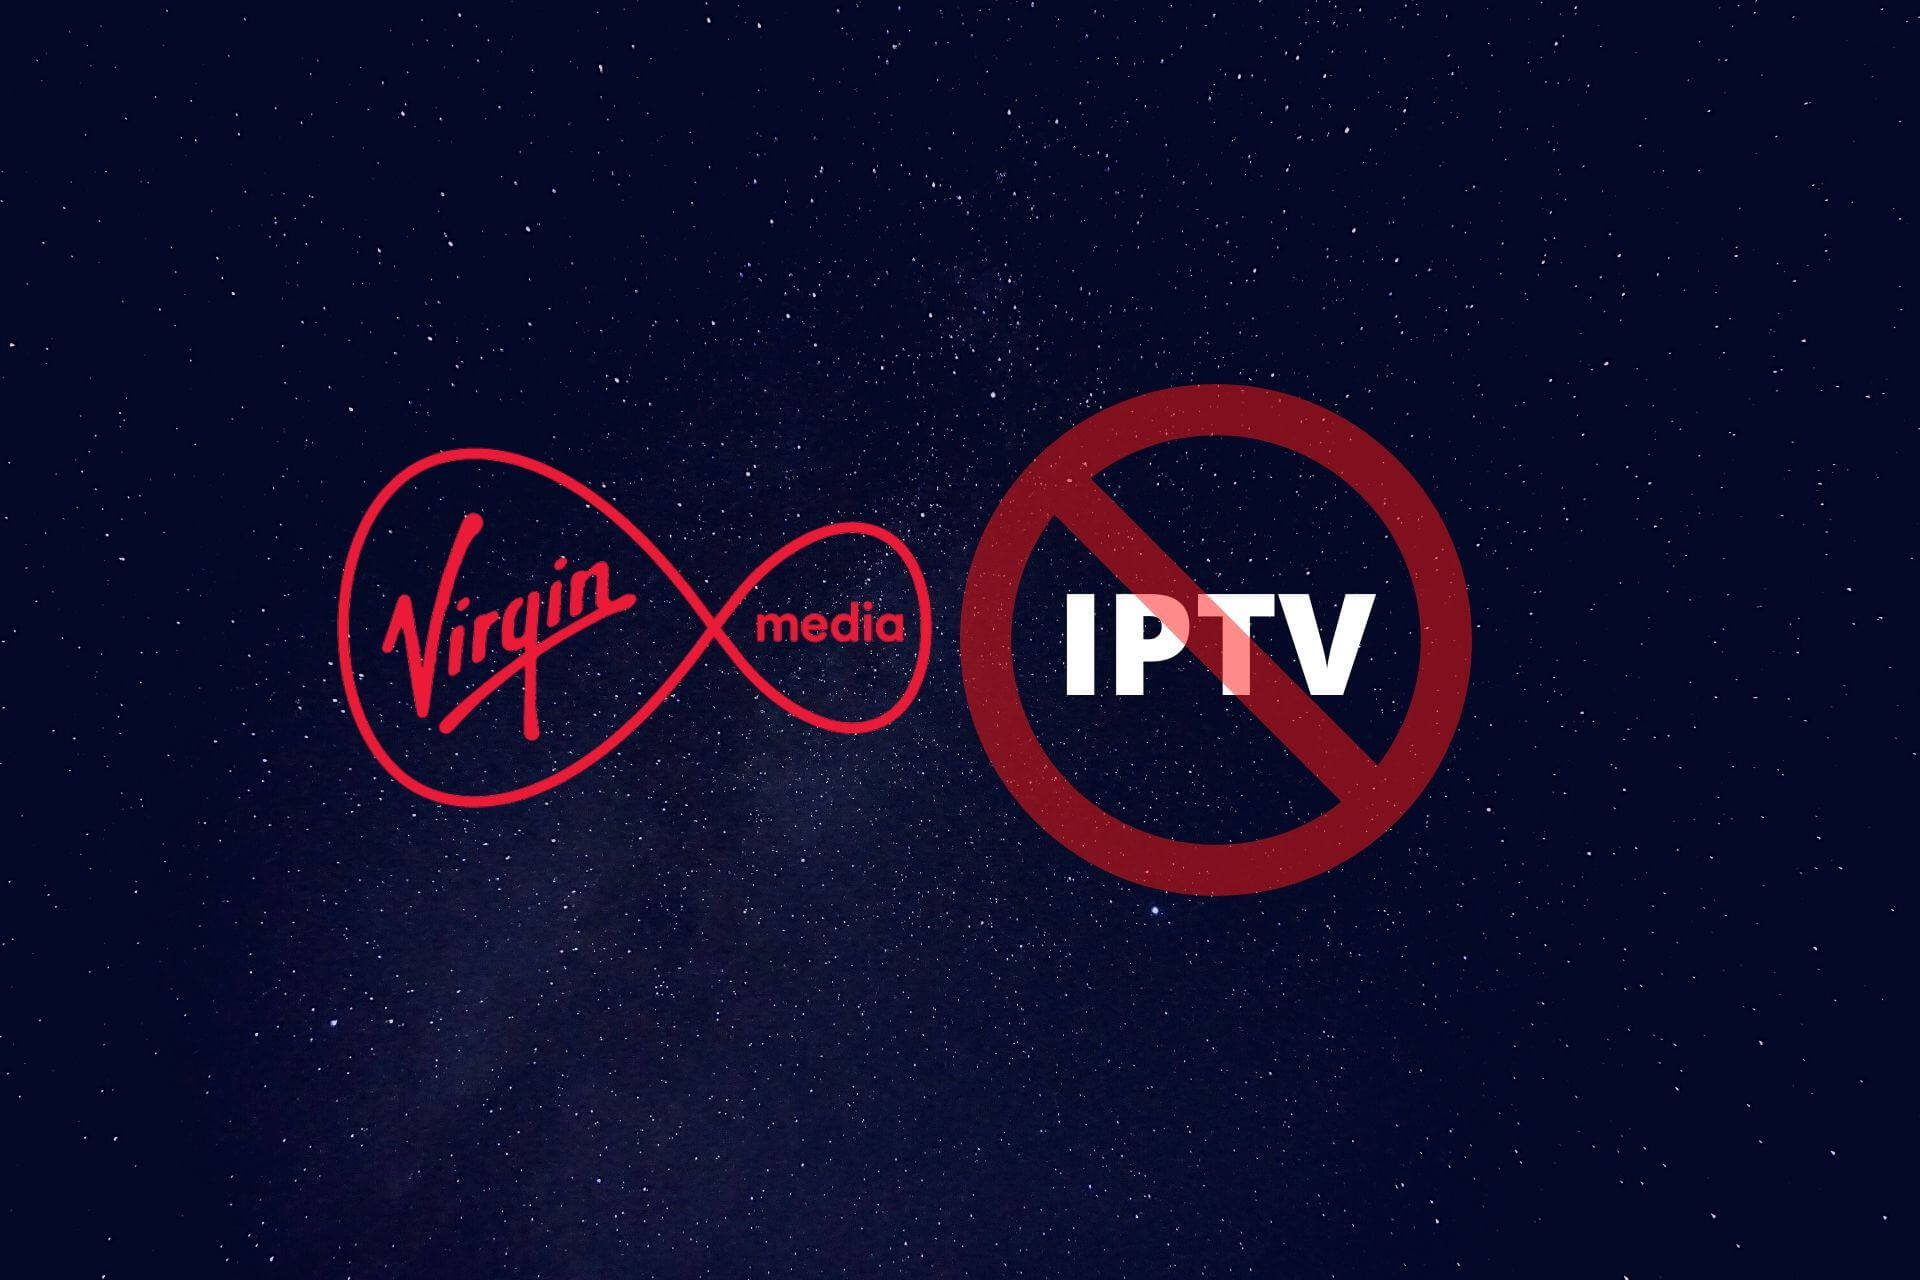 Virgin media isp content blocking